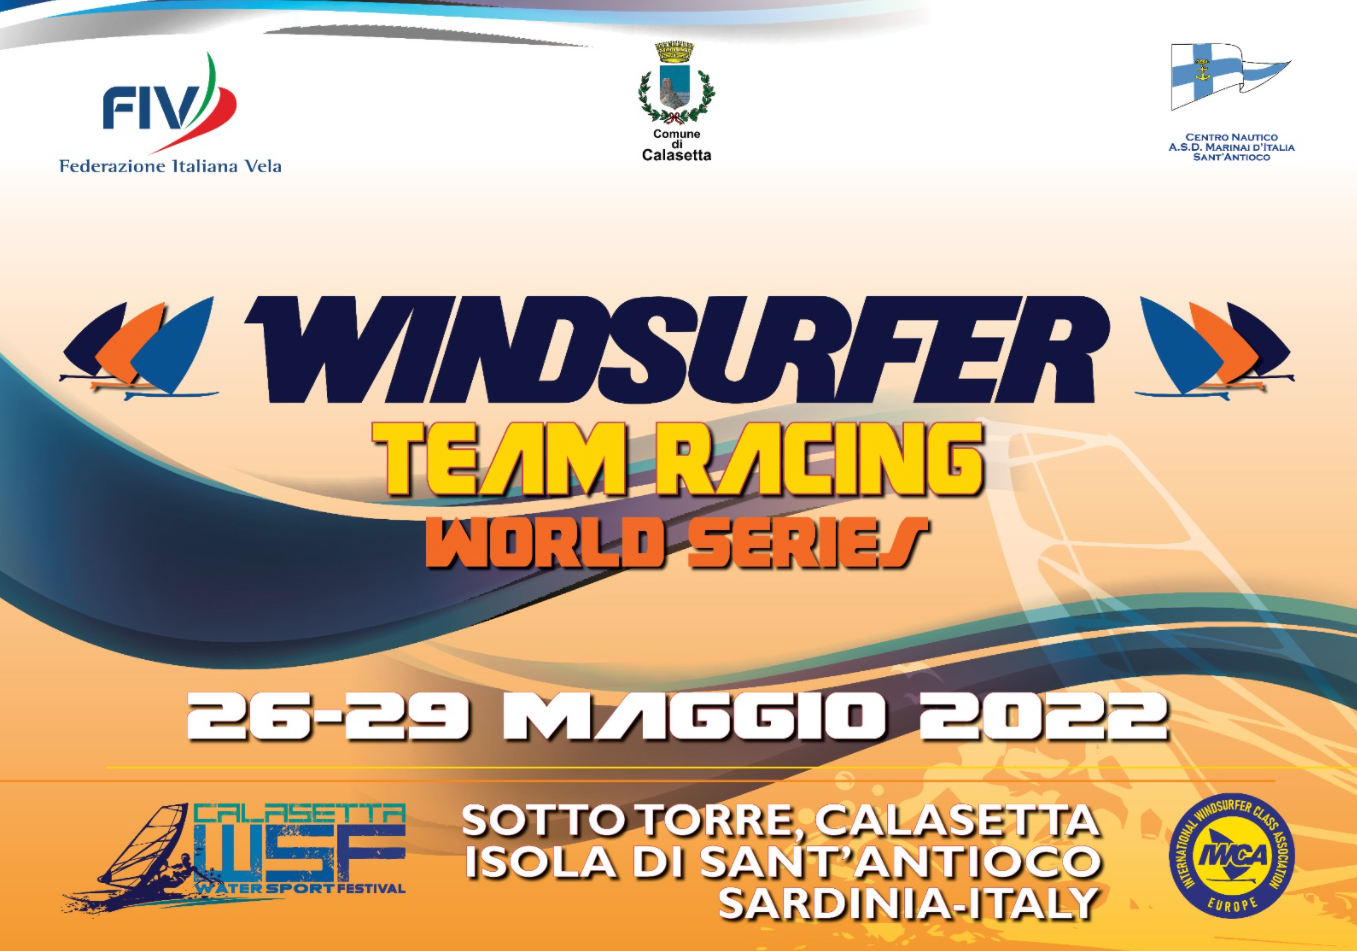 Windsurfer TEAM Racing World Series